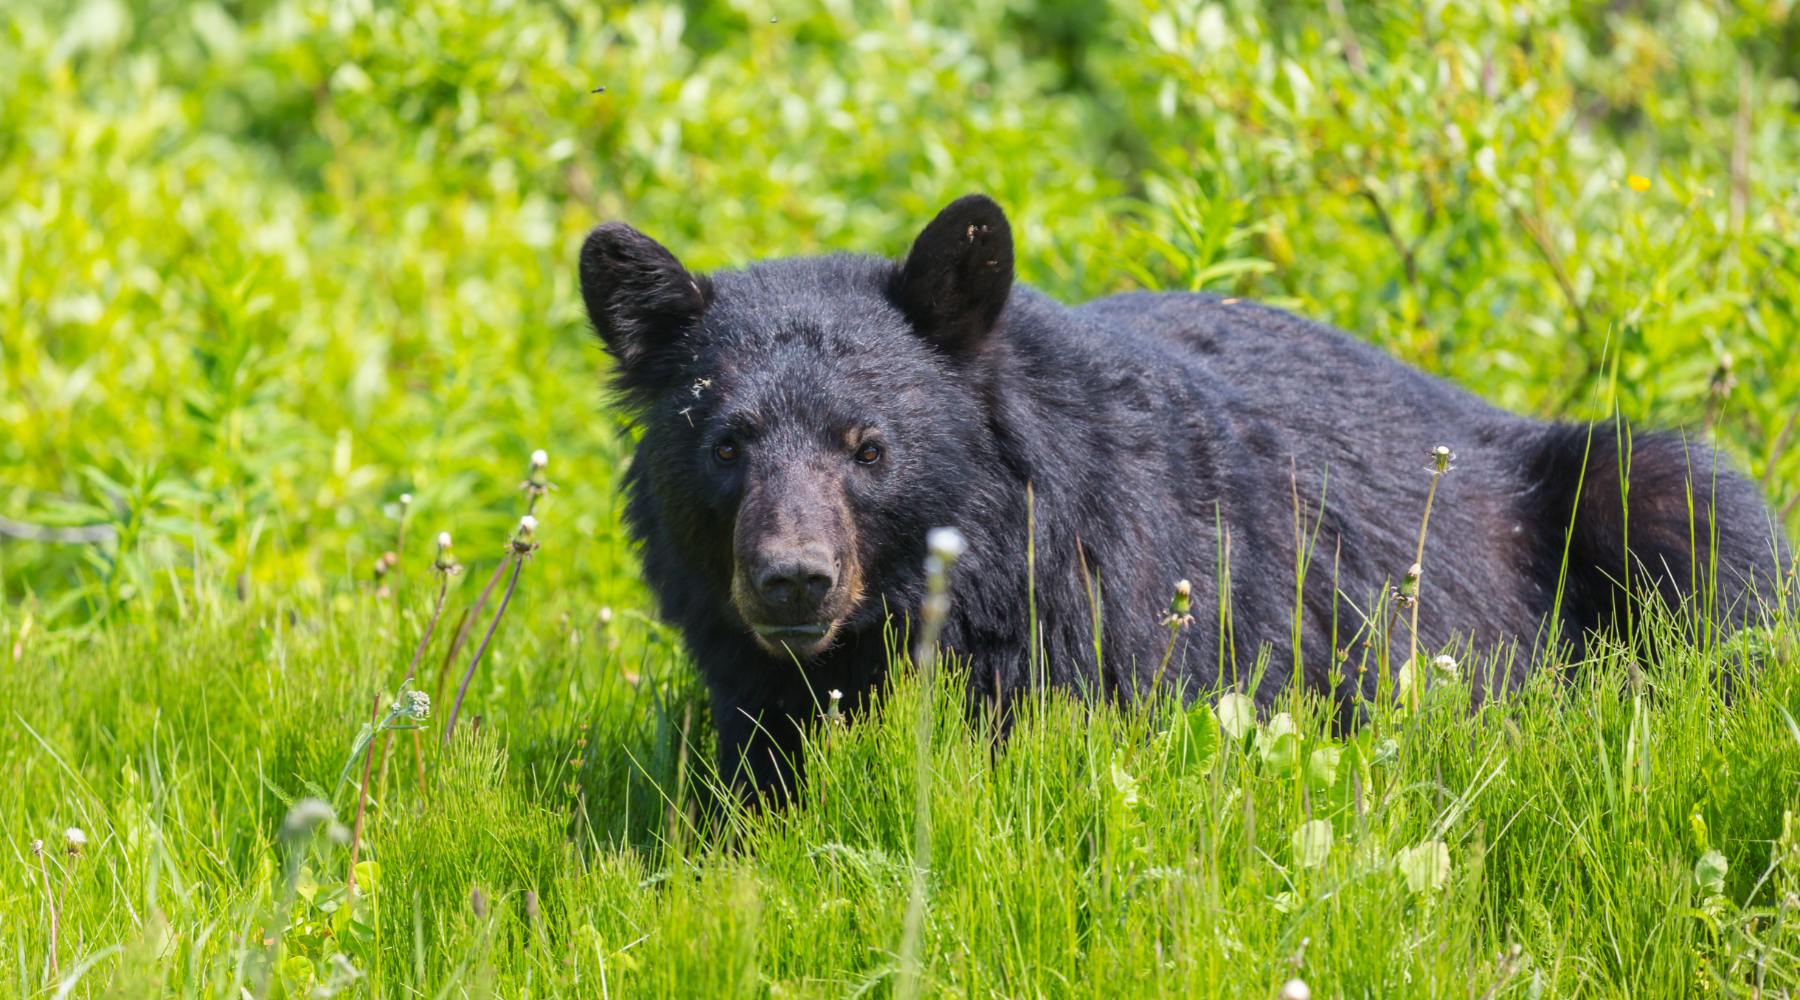 Black bear lying on grass